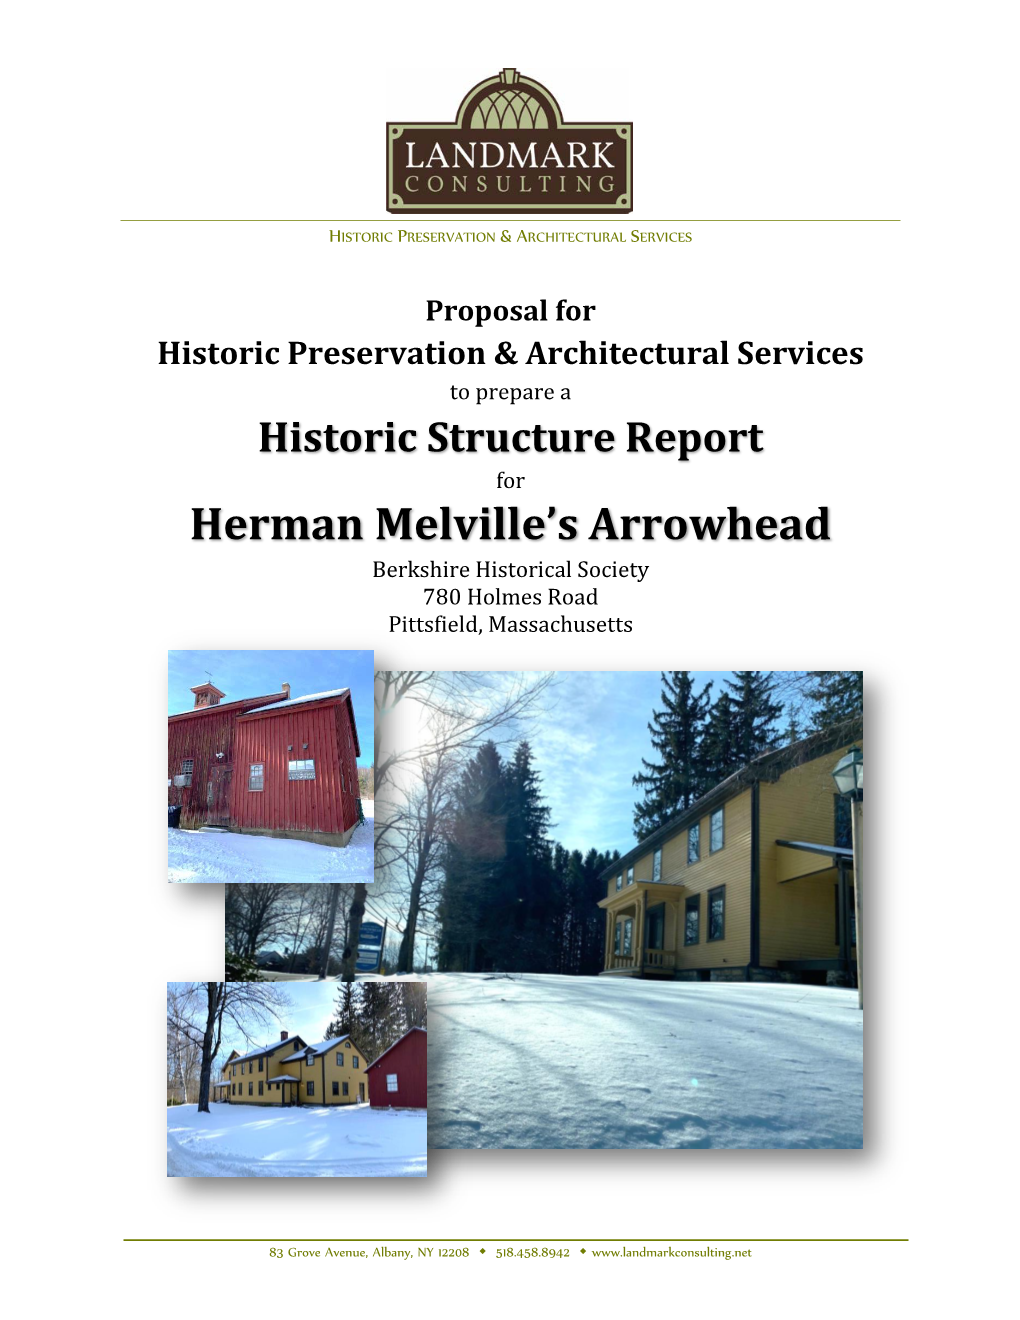 Herman Melville's Arrowhead